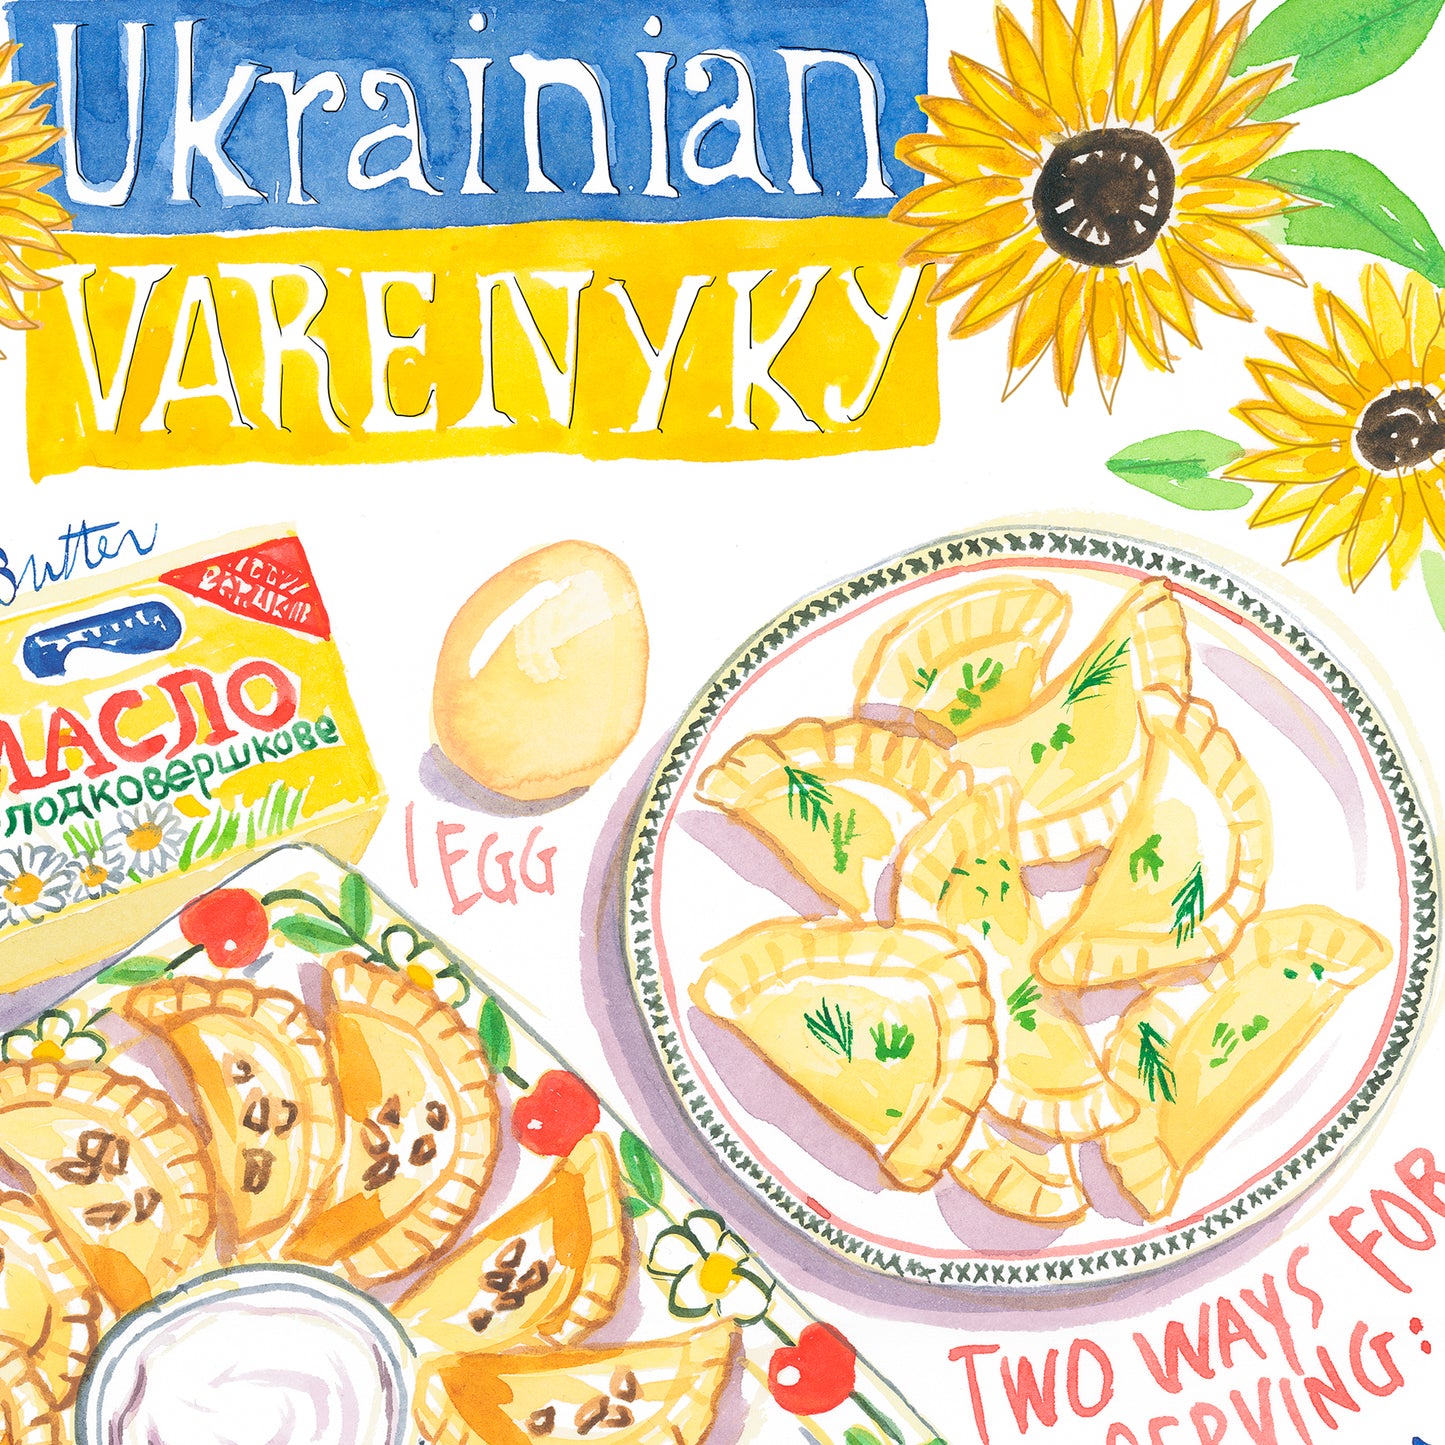 La Recette des raviolis ukrainiens - Varenyky